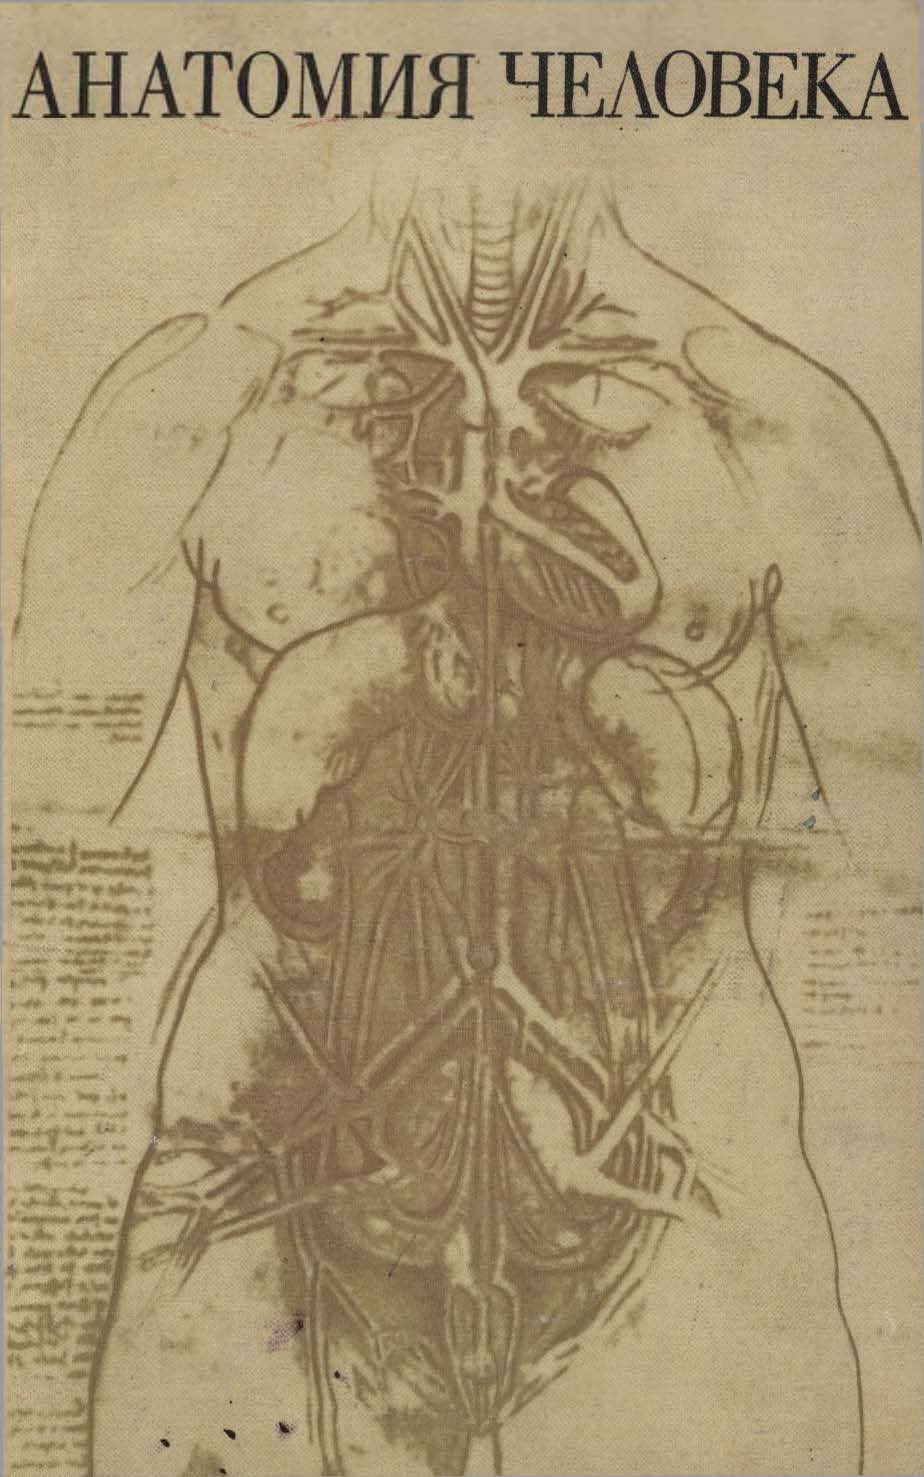 Анатомия человека пособия